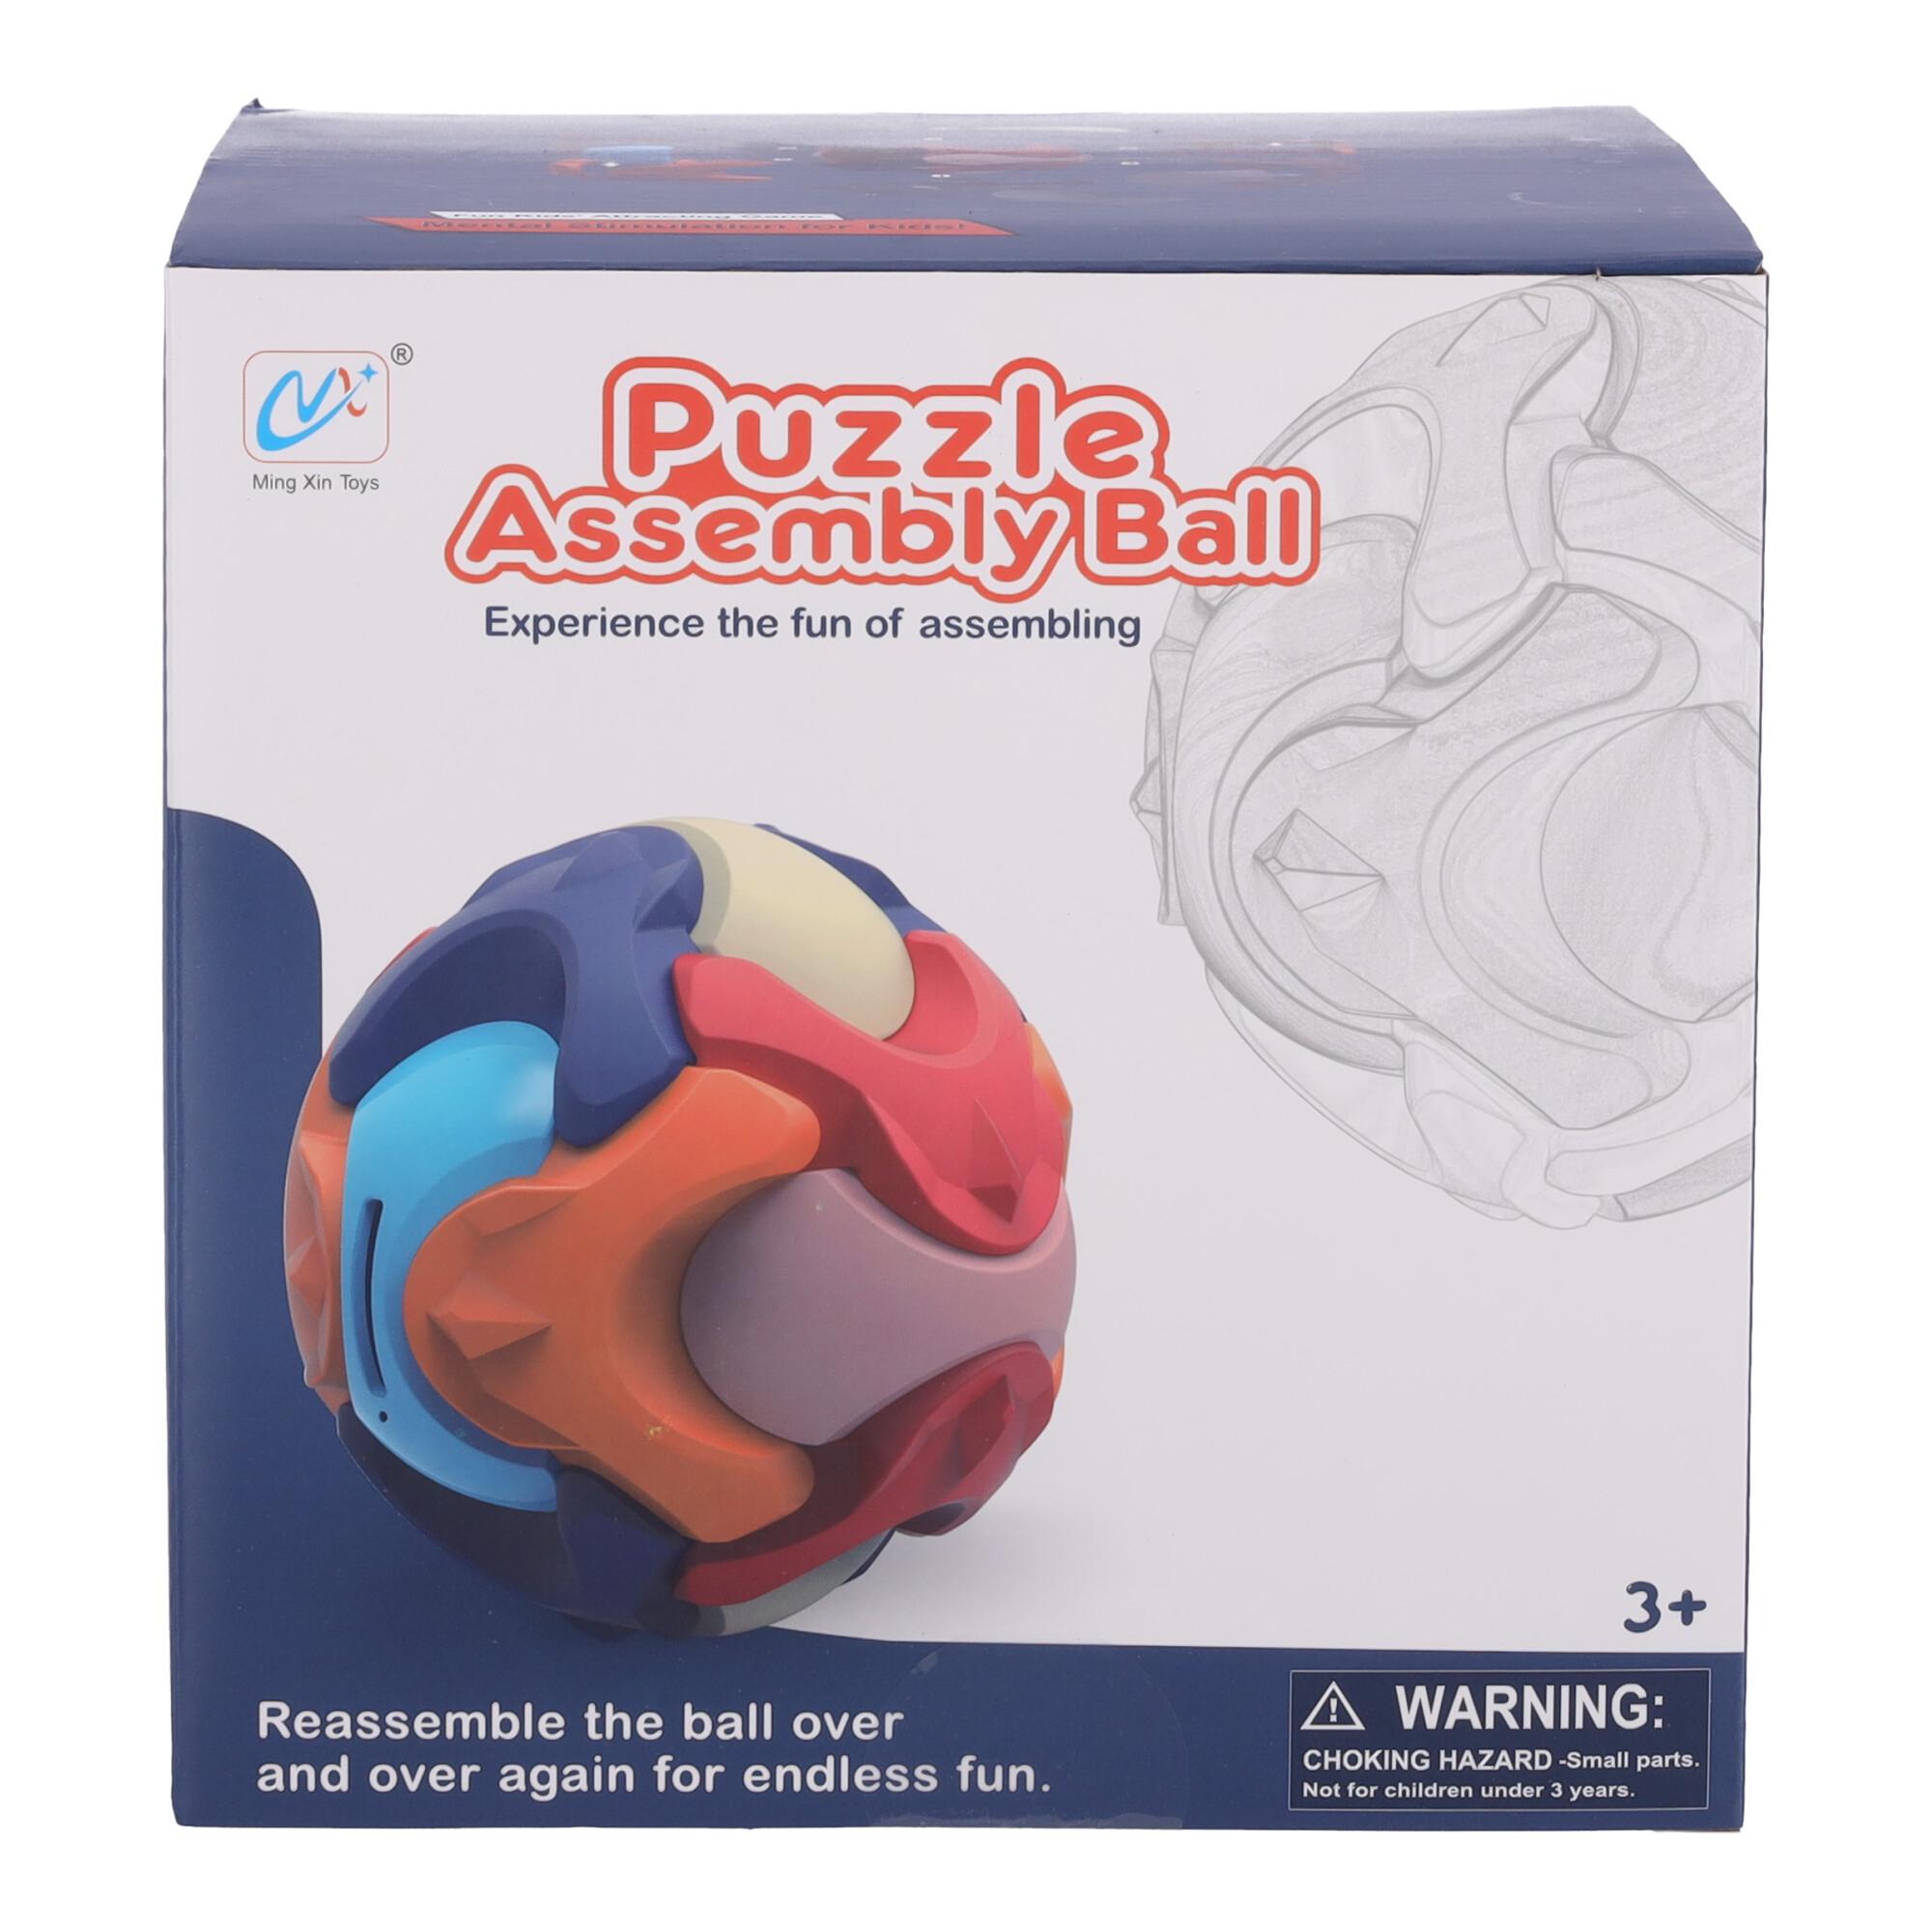 Moneybox, 3D puzzle folding ball - polygon